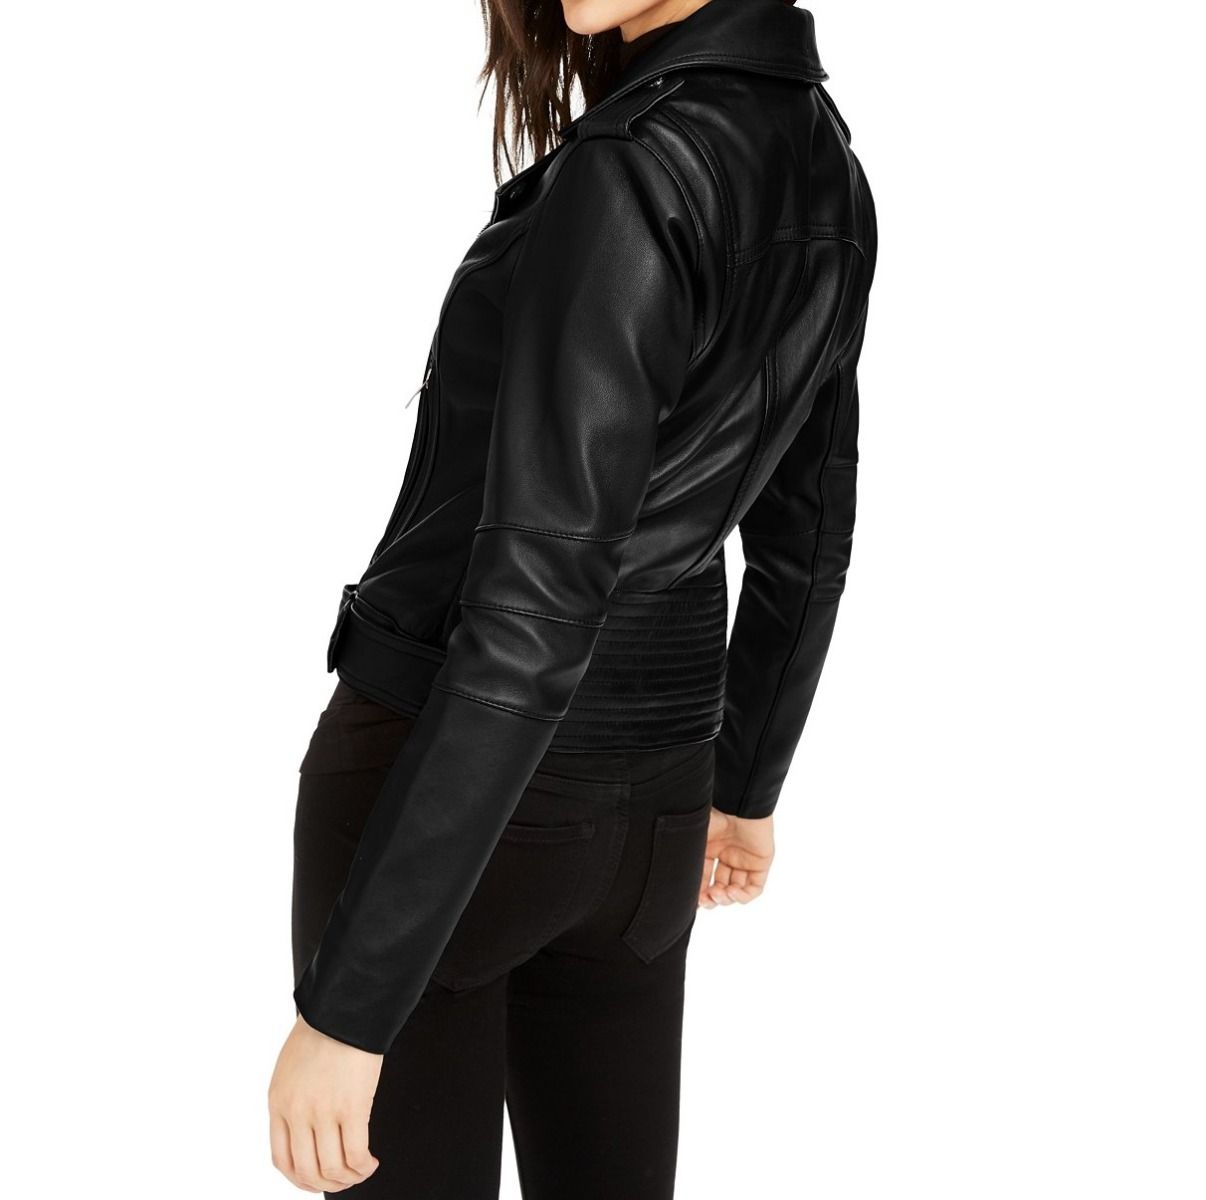 Black Waist Length Leather Biker Jacket w/ Notch Collar - Oba